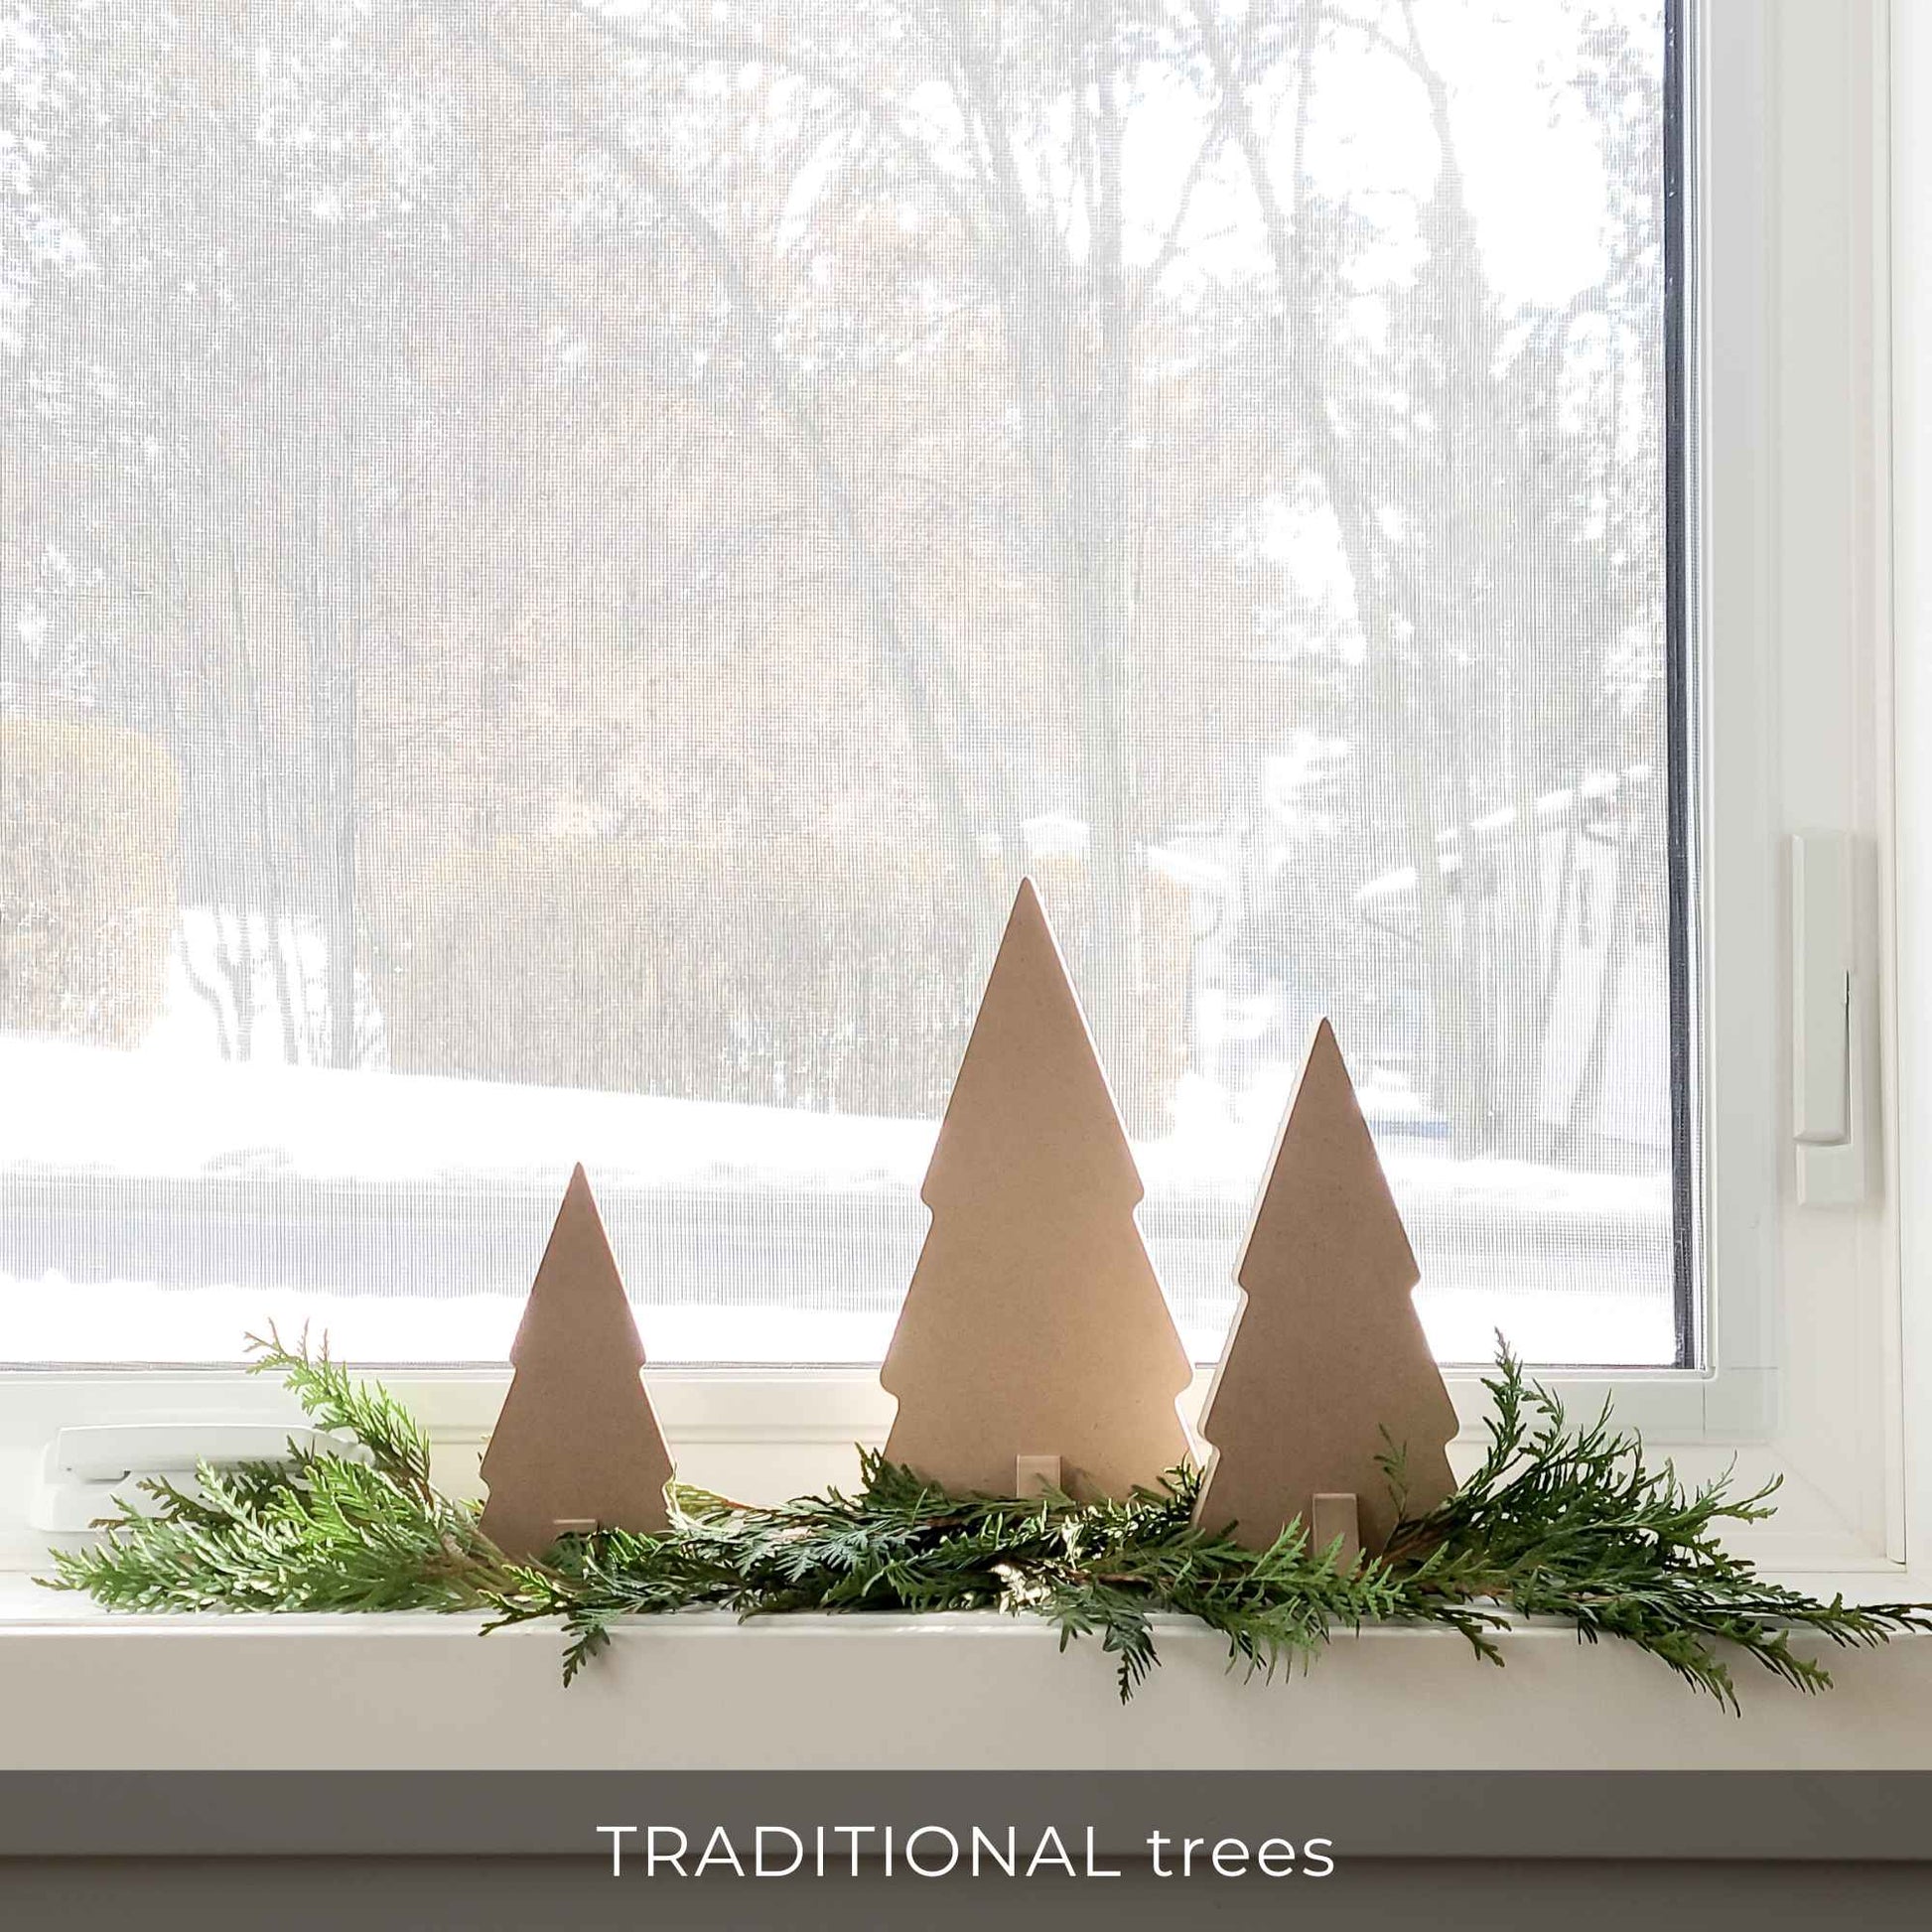 Wooden tree decor on window ledge for simple Christmas decor 